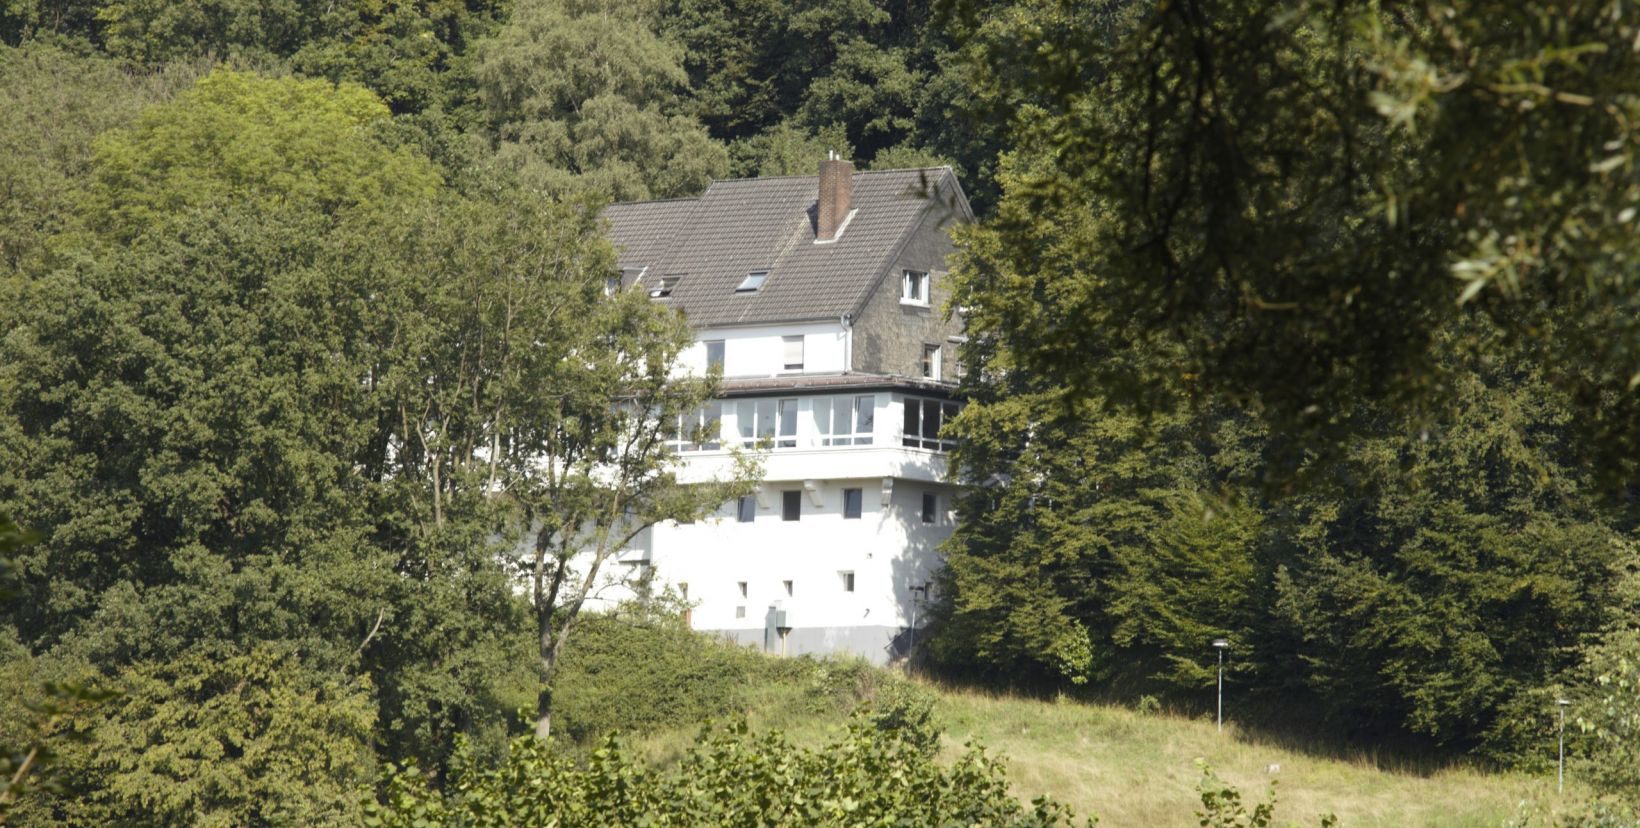 Panorama der Fachklinik Aggerblick, Overath